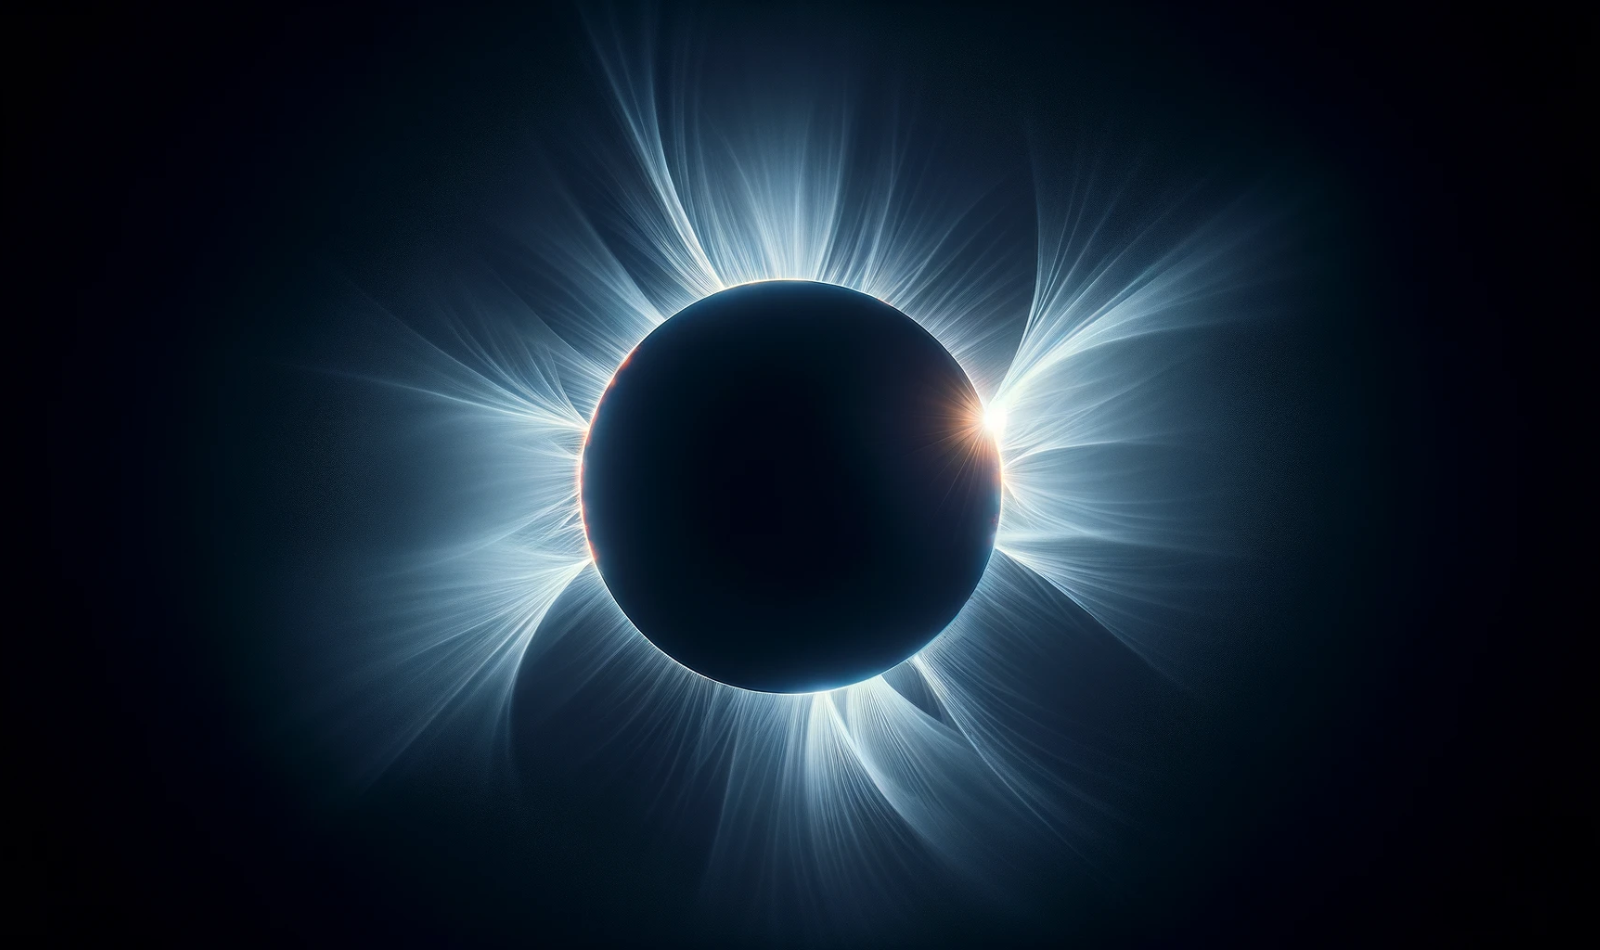 Eclipse solar simulado